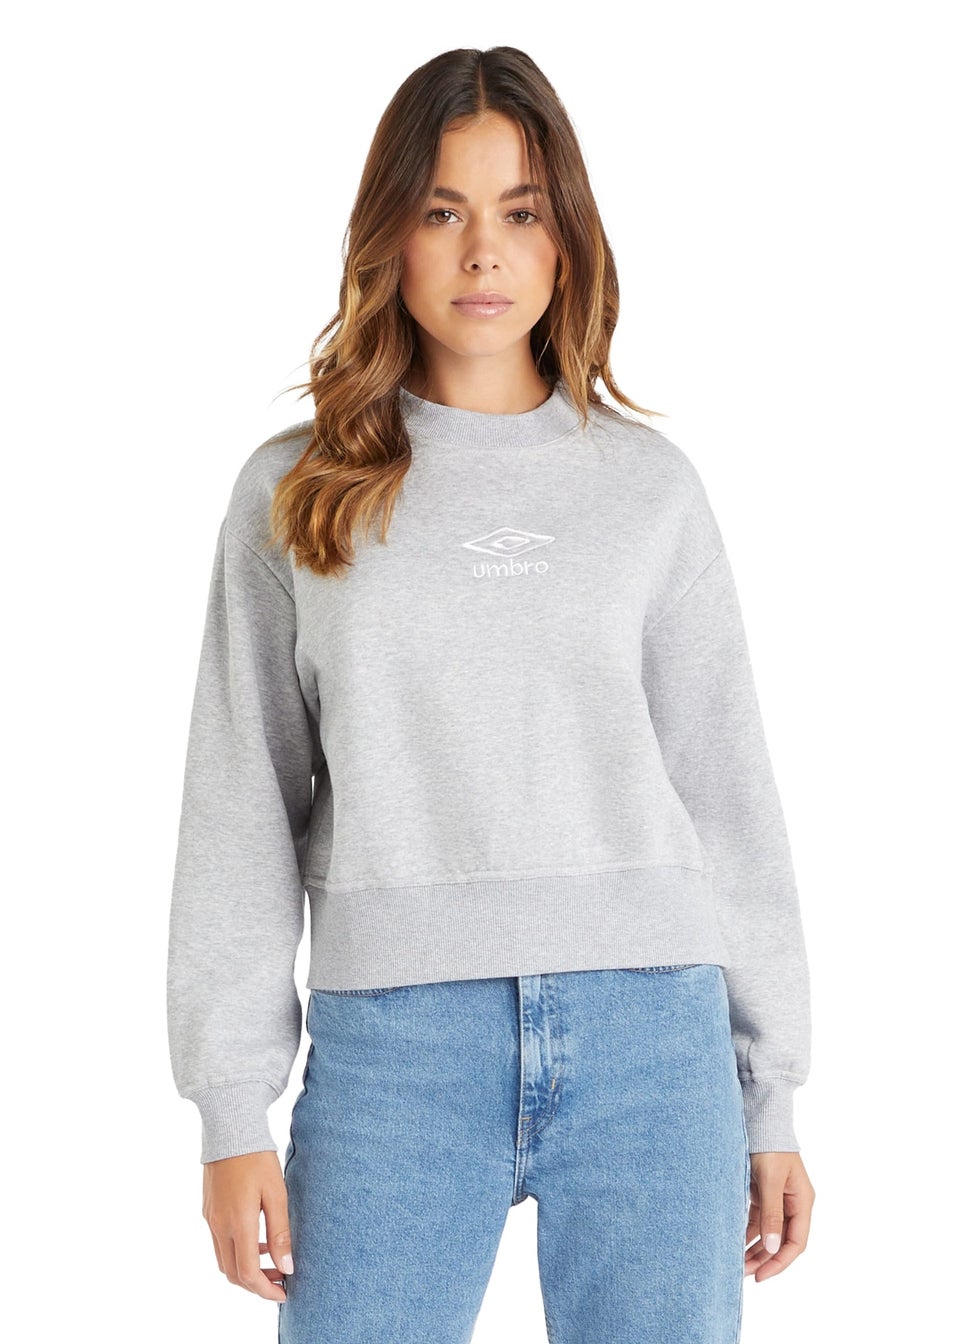 Umbro Grey/White Core Boxy Sweatshirt